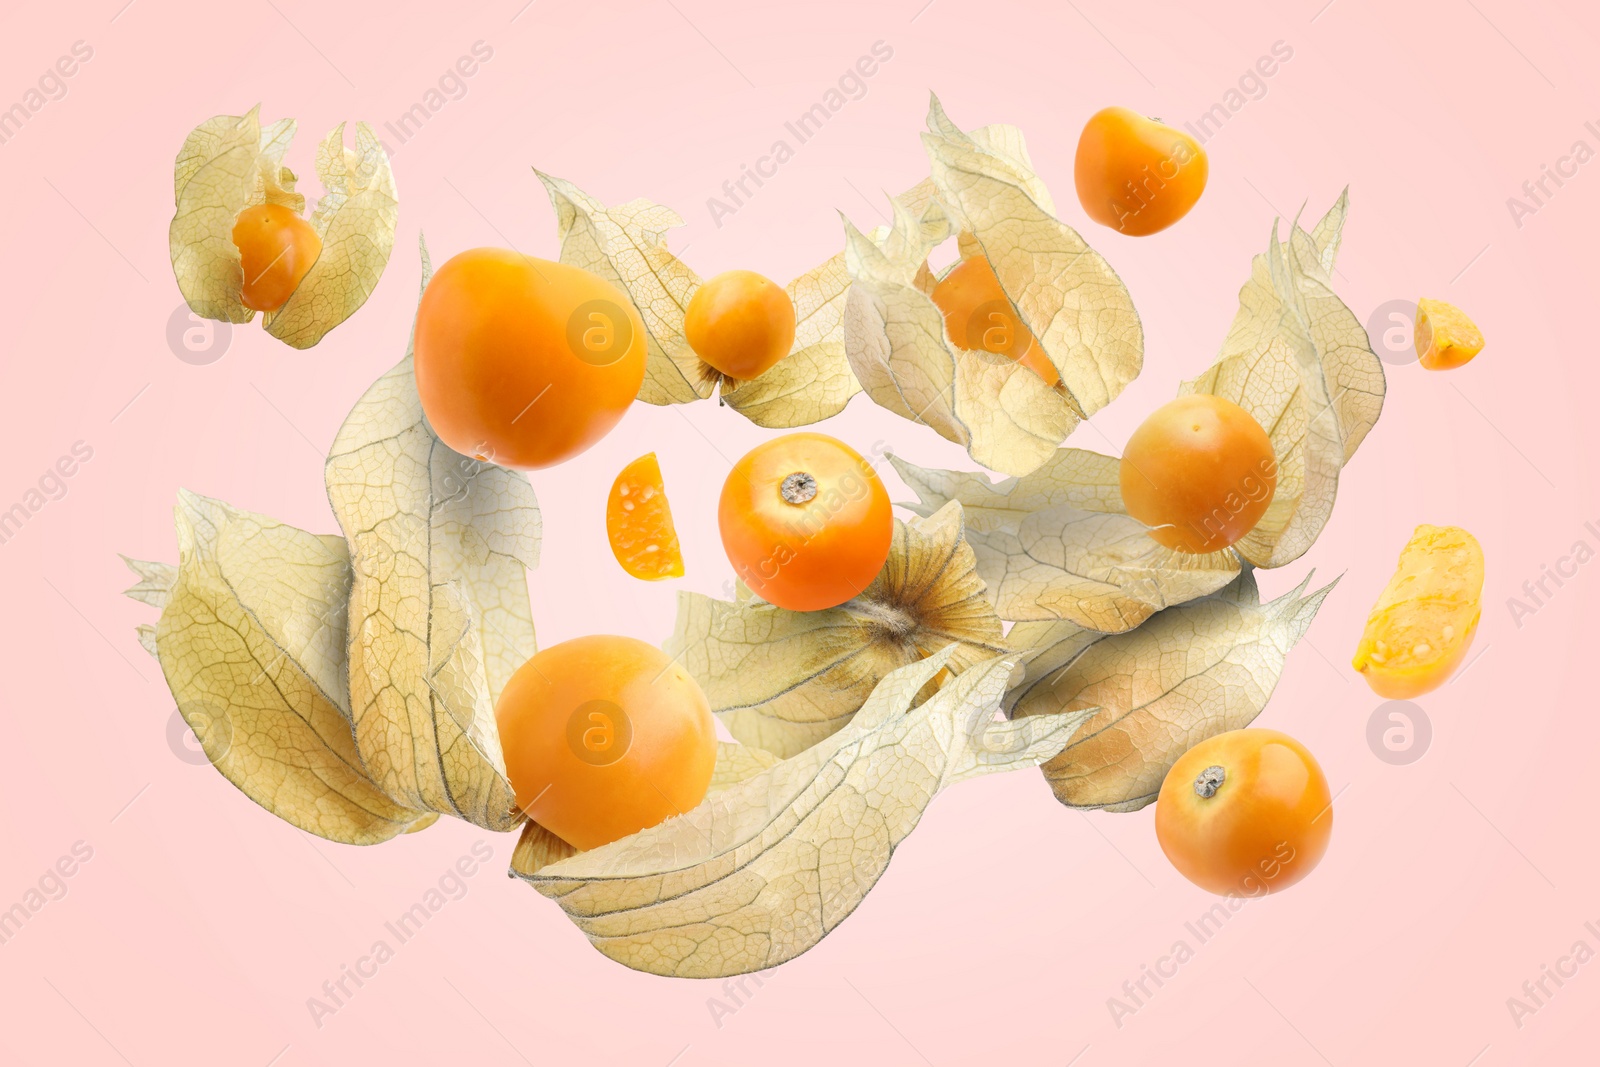 Image of Ripe orange physalis fruits with calyx falling on pink background